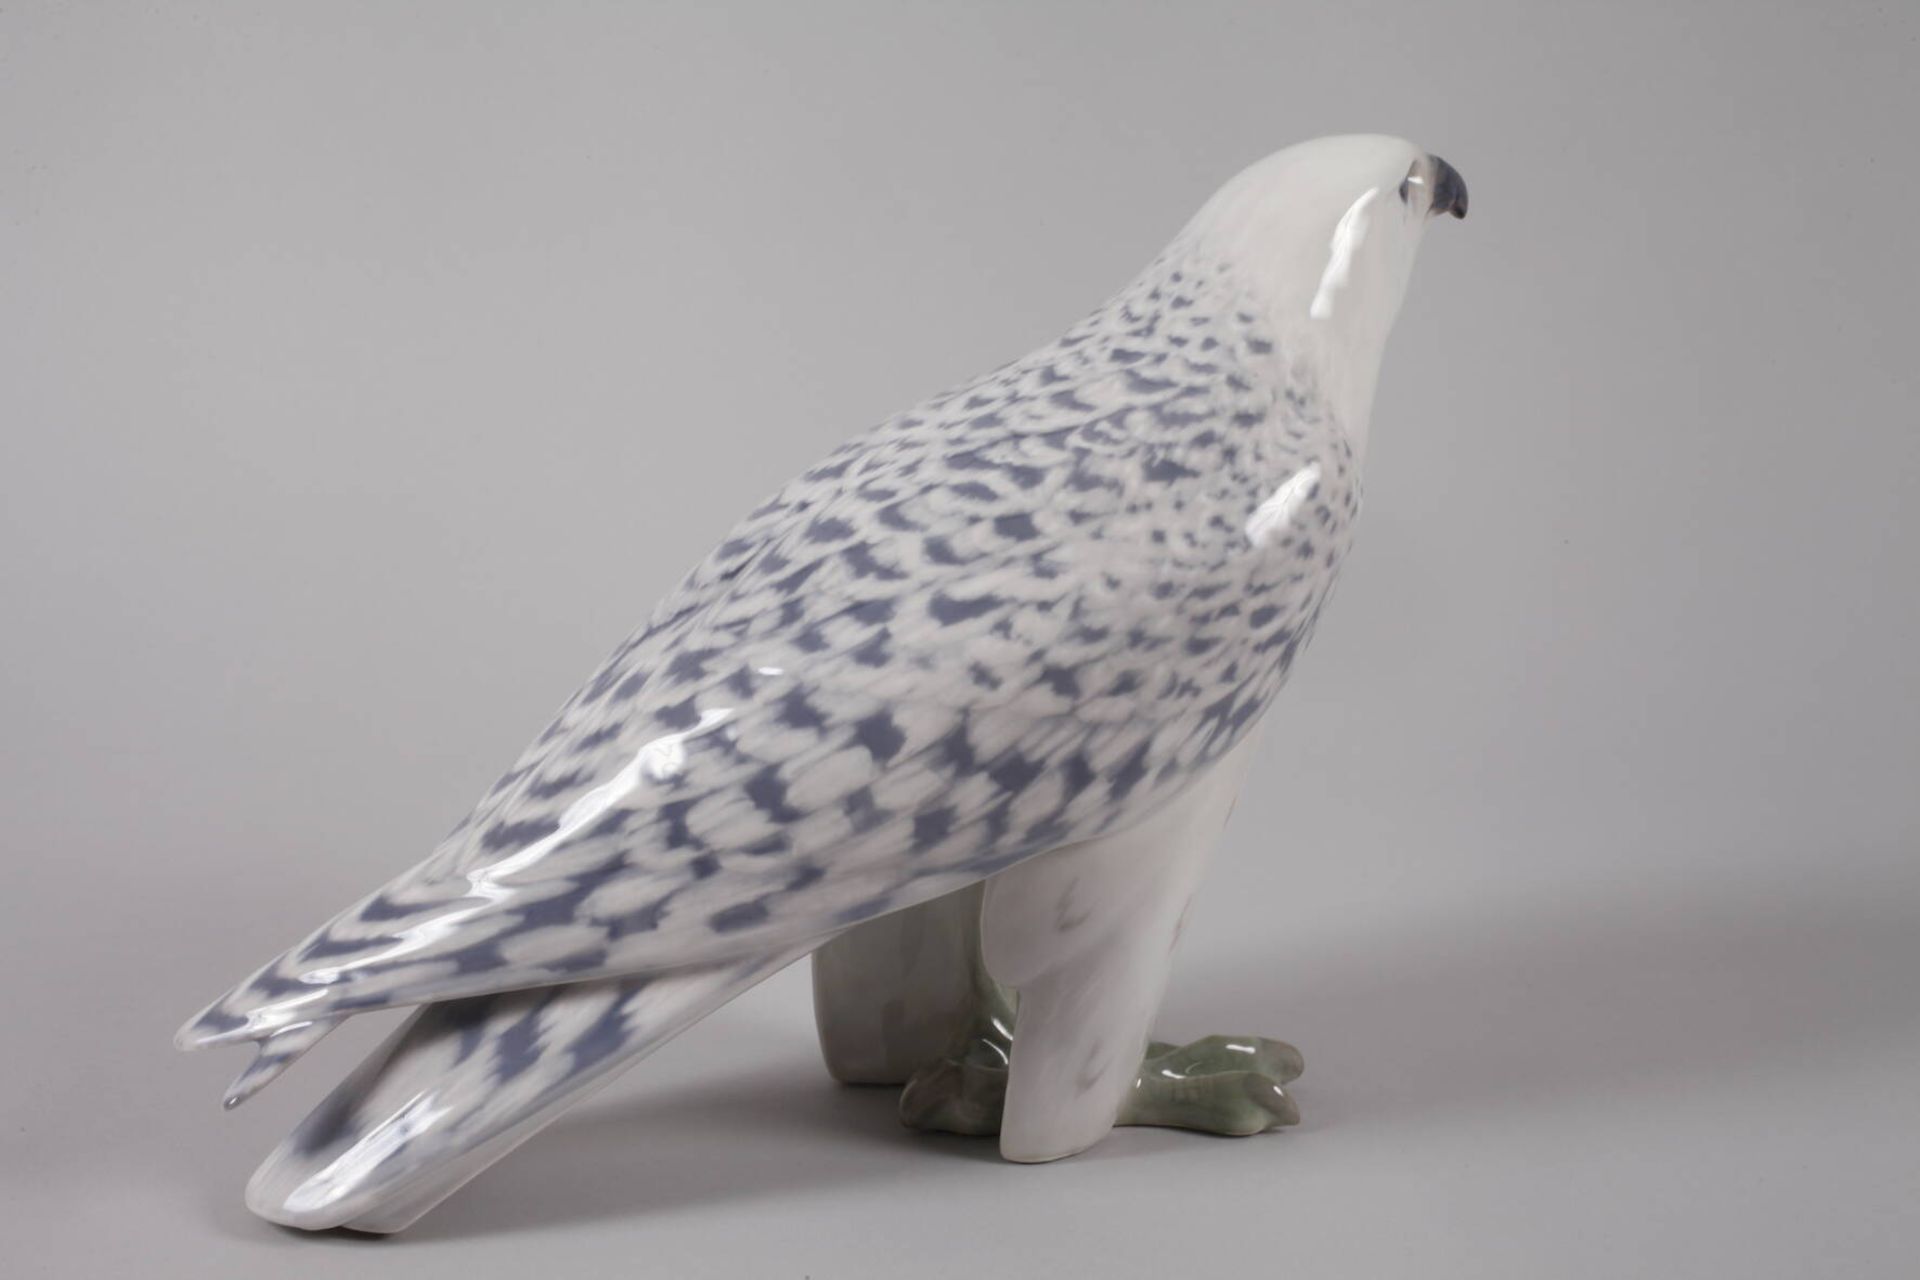 Copenhagen "Icelandic Falcon" - Image 4 of 6